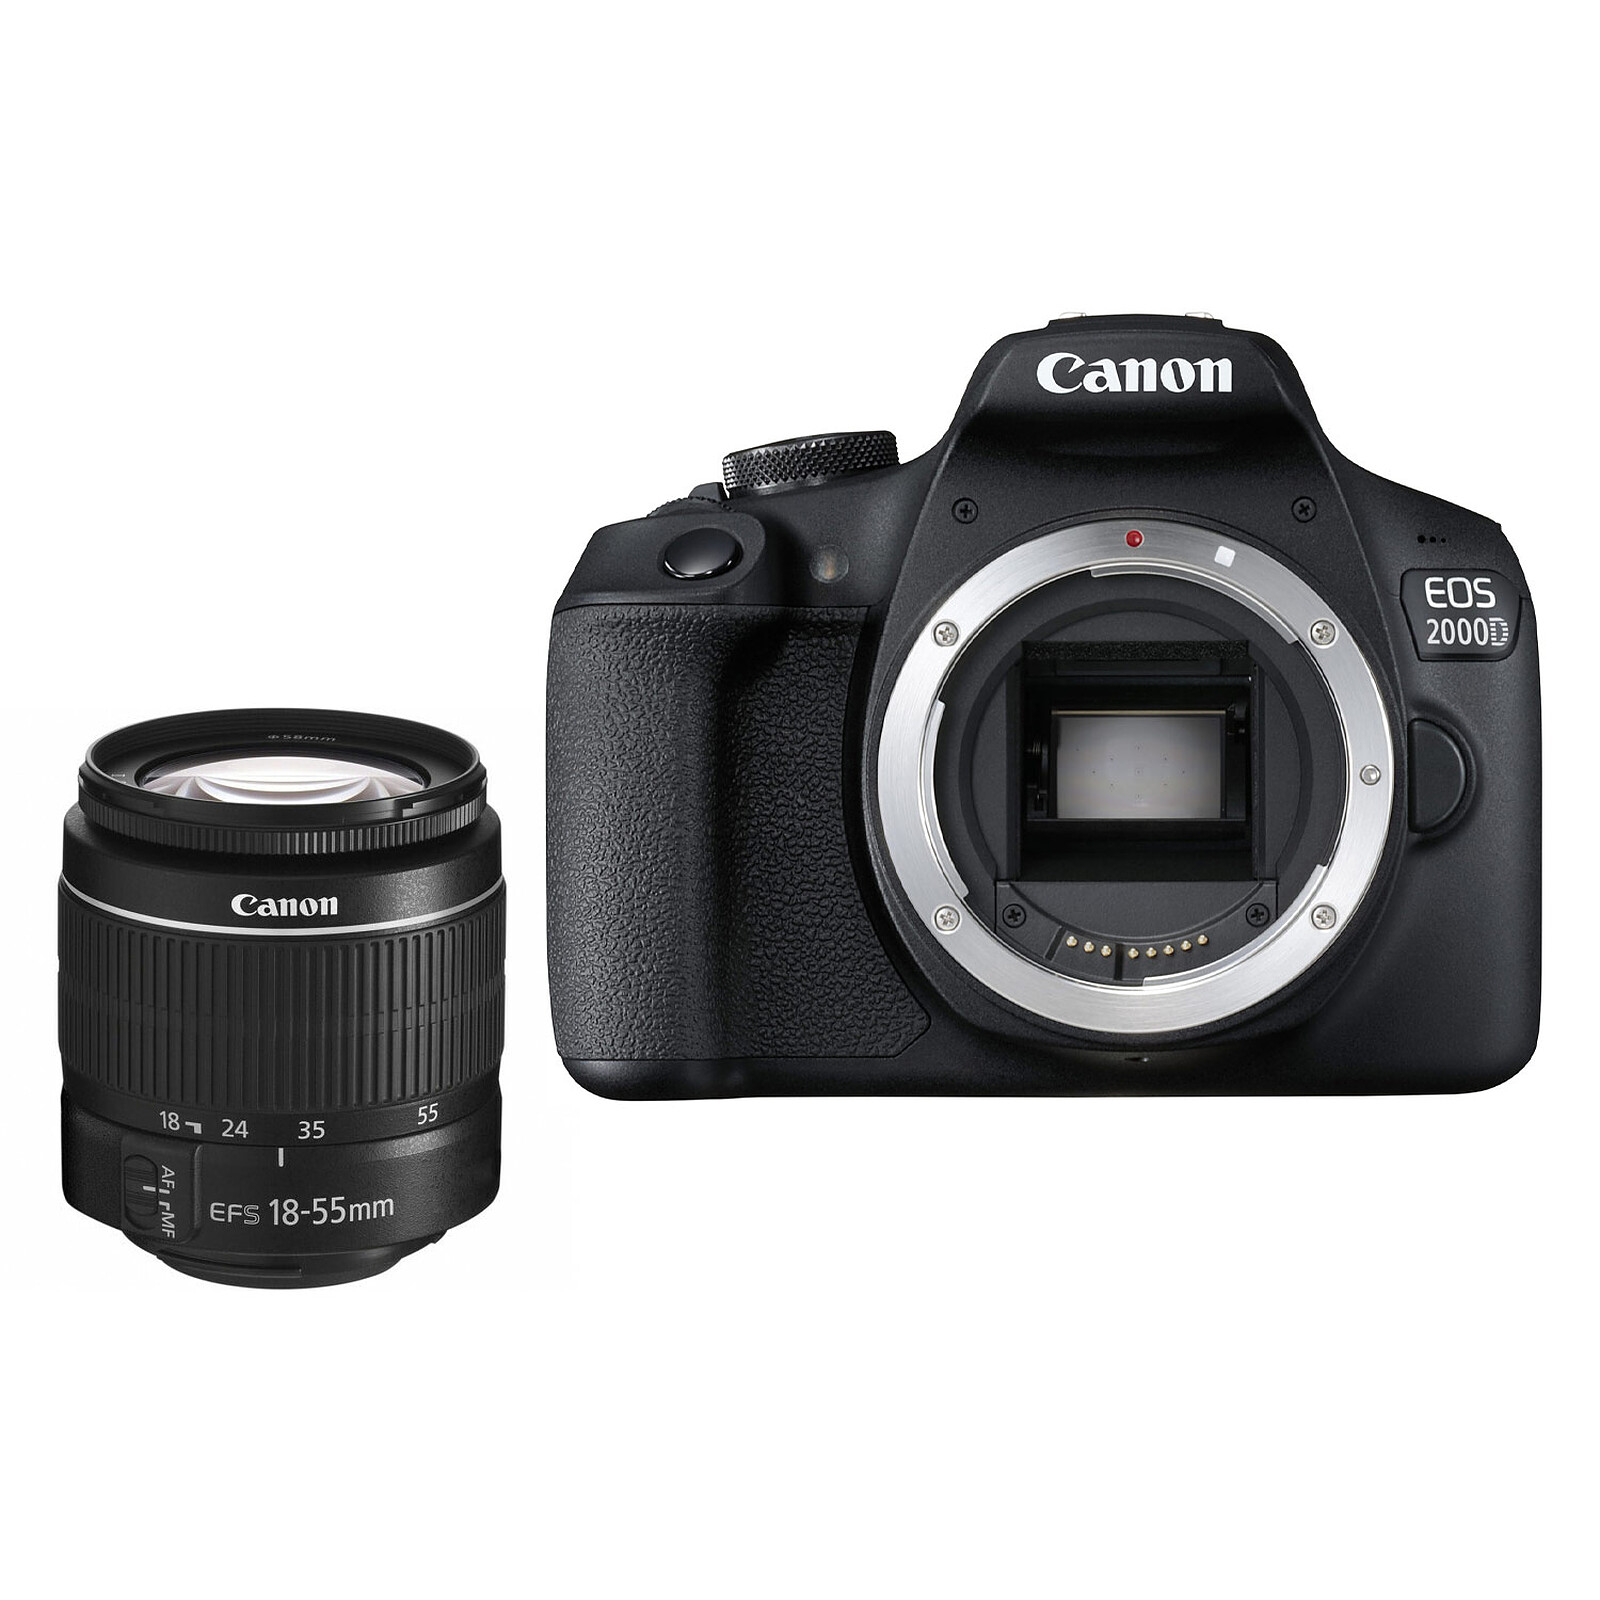 Canon EOS 2000D DSLR Starter Kit with EF-S 18-55mm IS II Lens, Bag